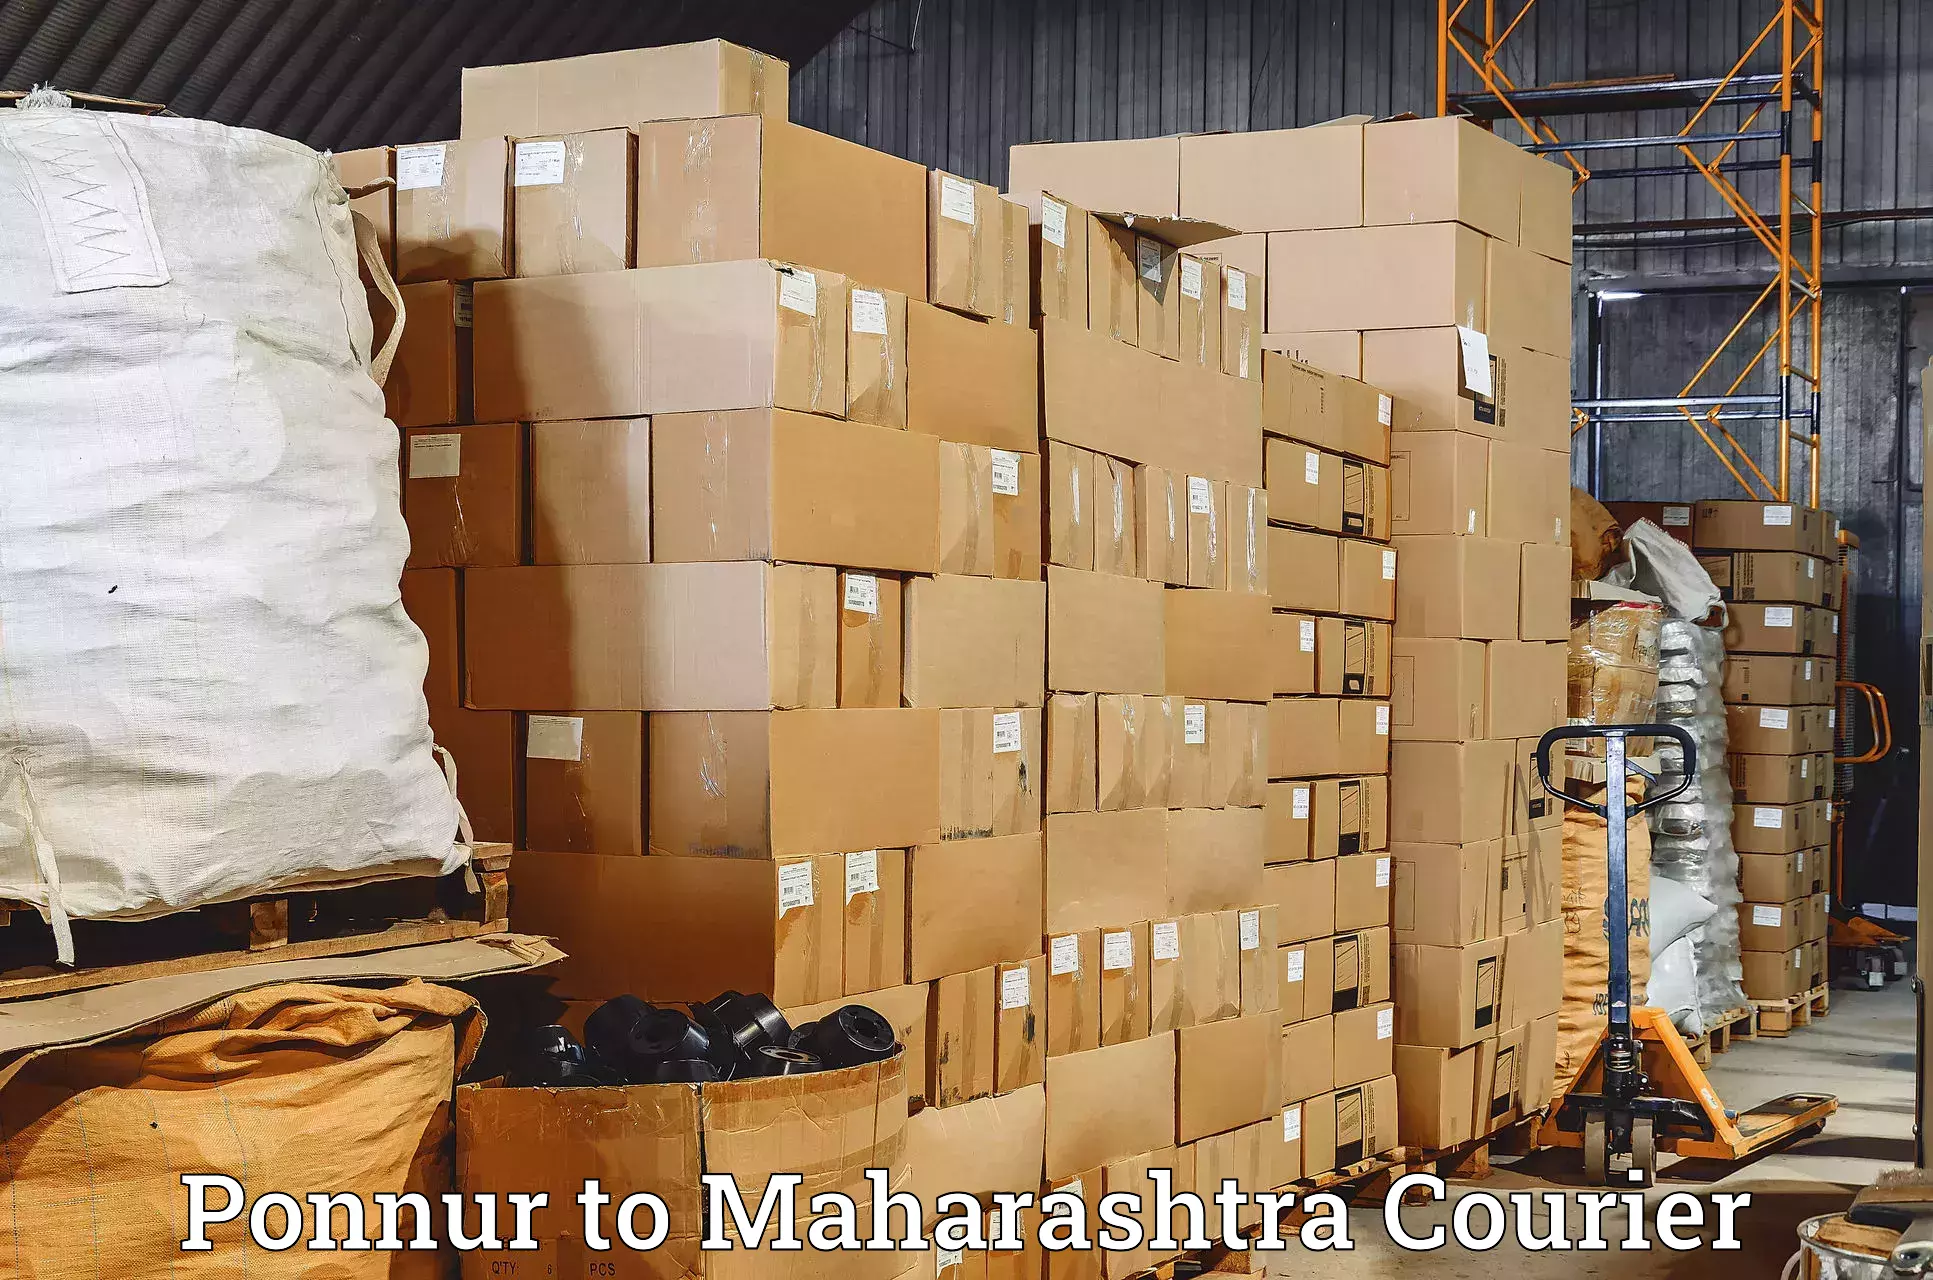 Subscription-based courier Ponnur to Maharashtra